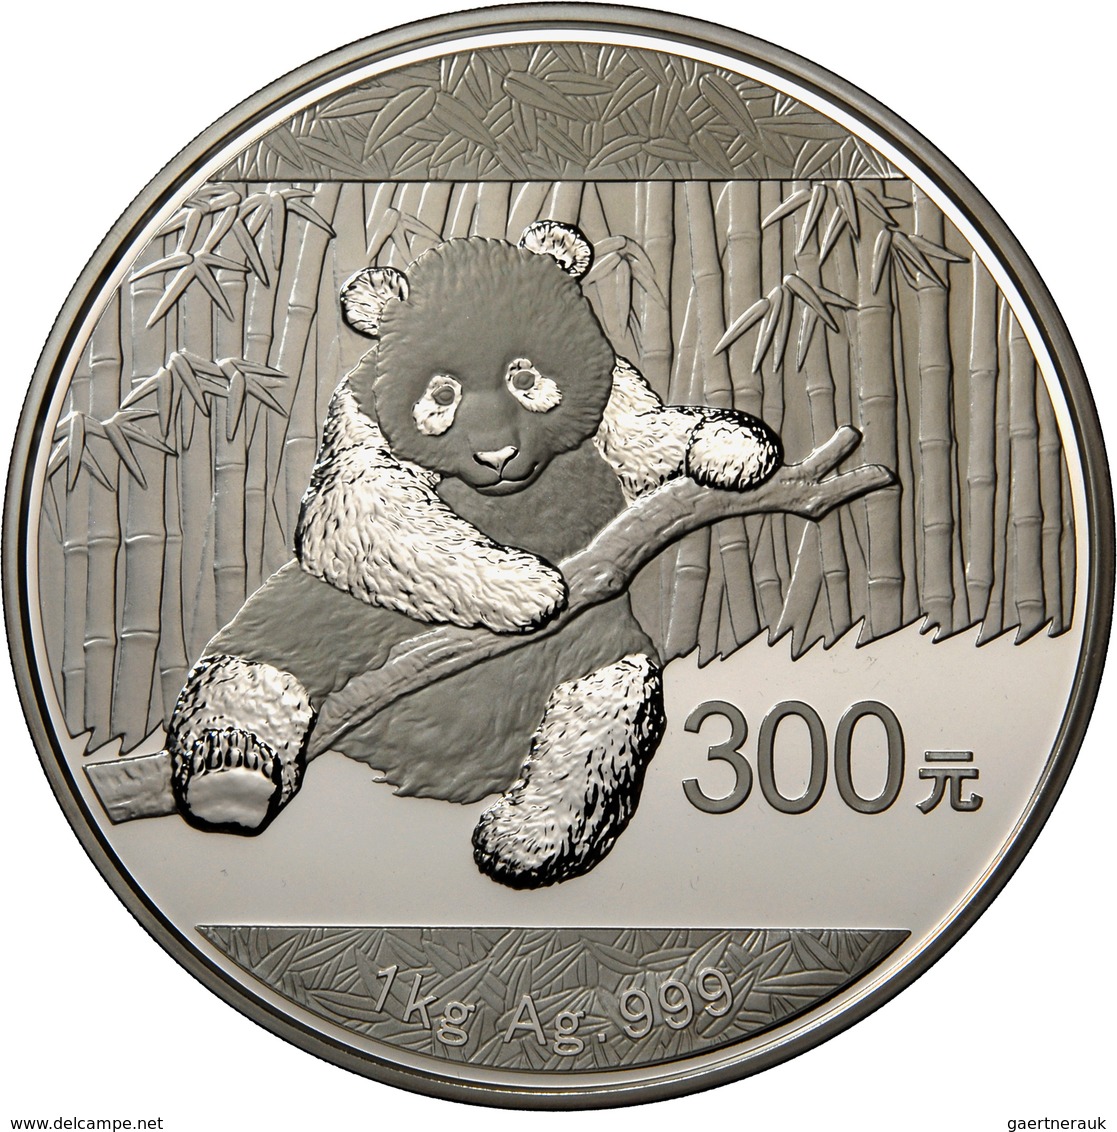 China - Volksrepublik: 300 Yuan 2014, Silber Panda, 1 Kg 999/1000 Silber. Inklusive Zertifikat, Etui - Cina